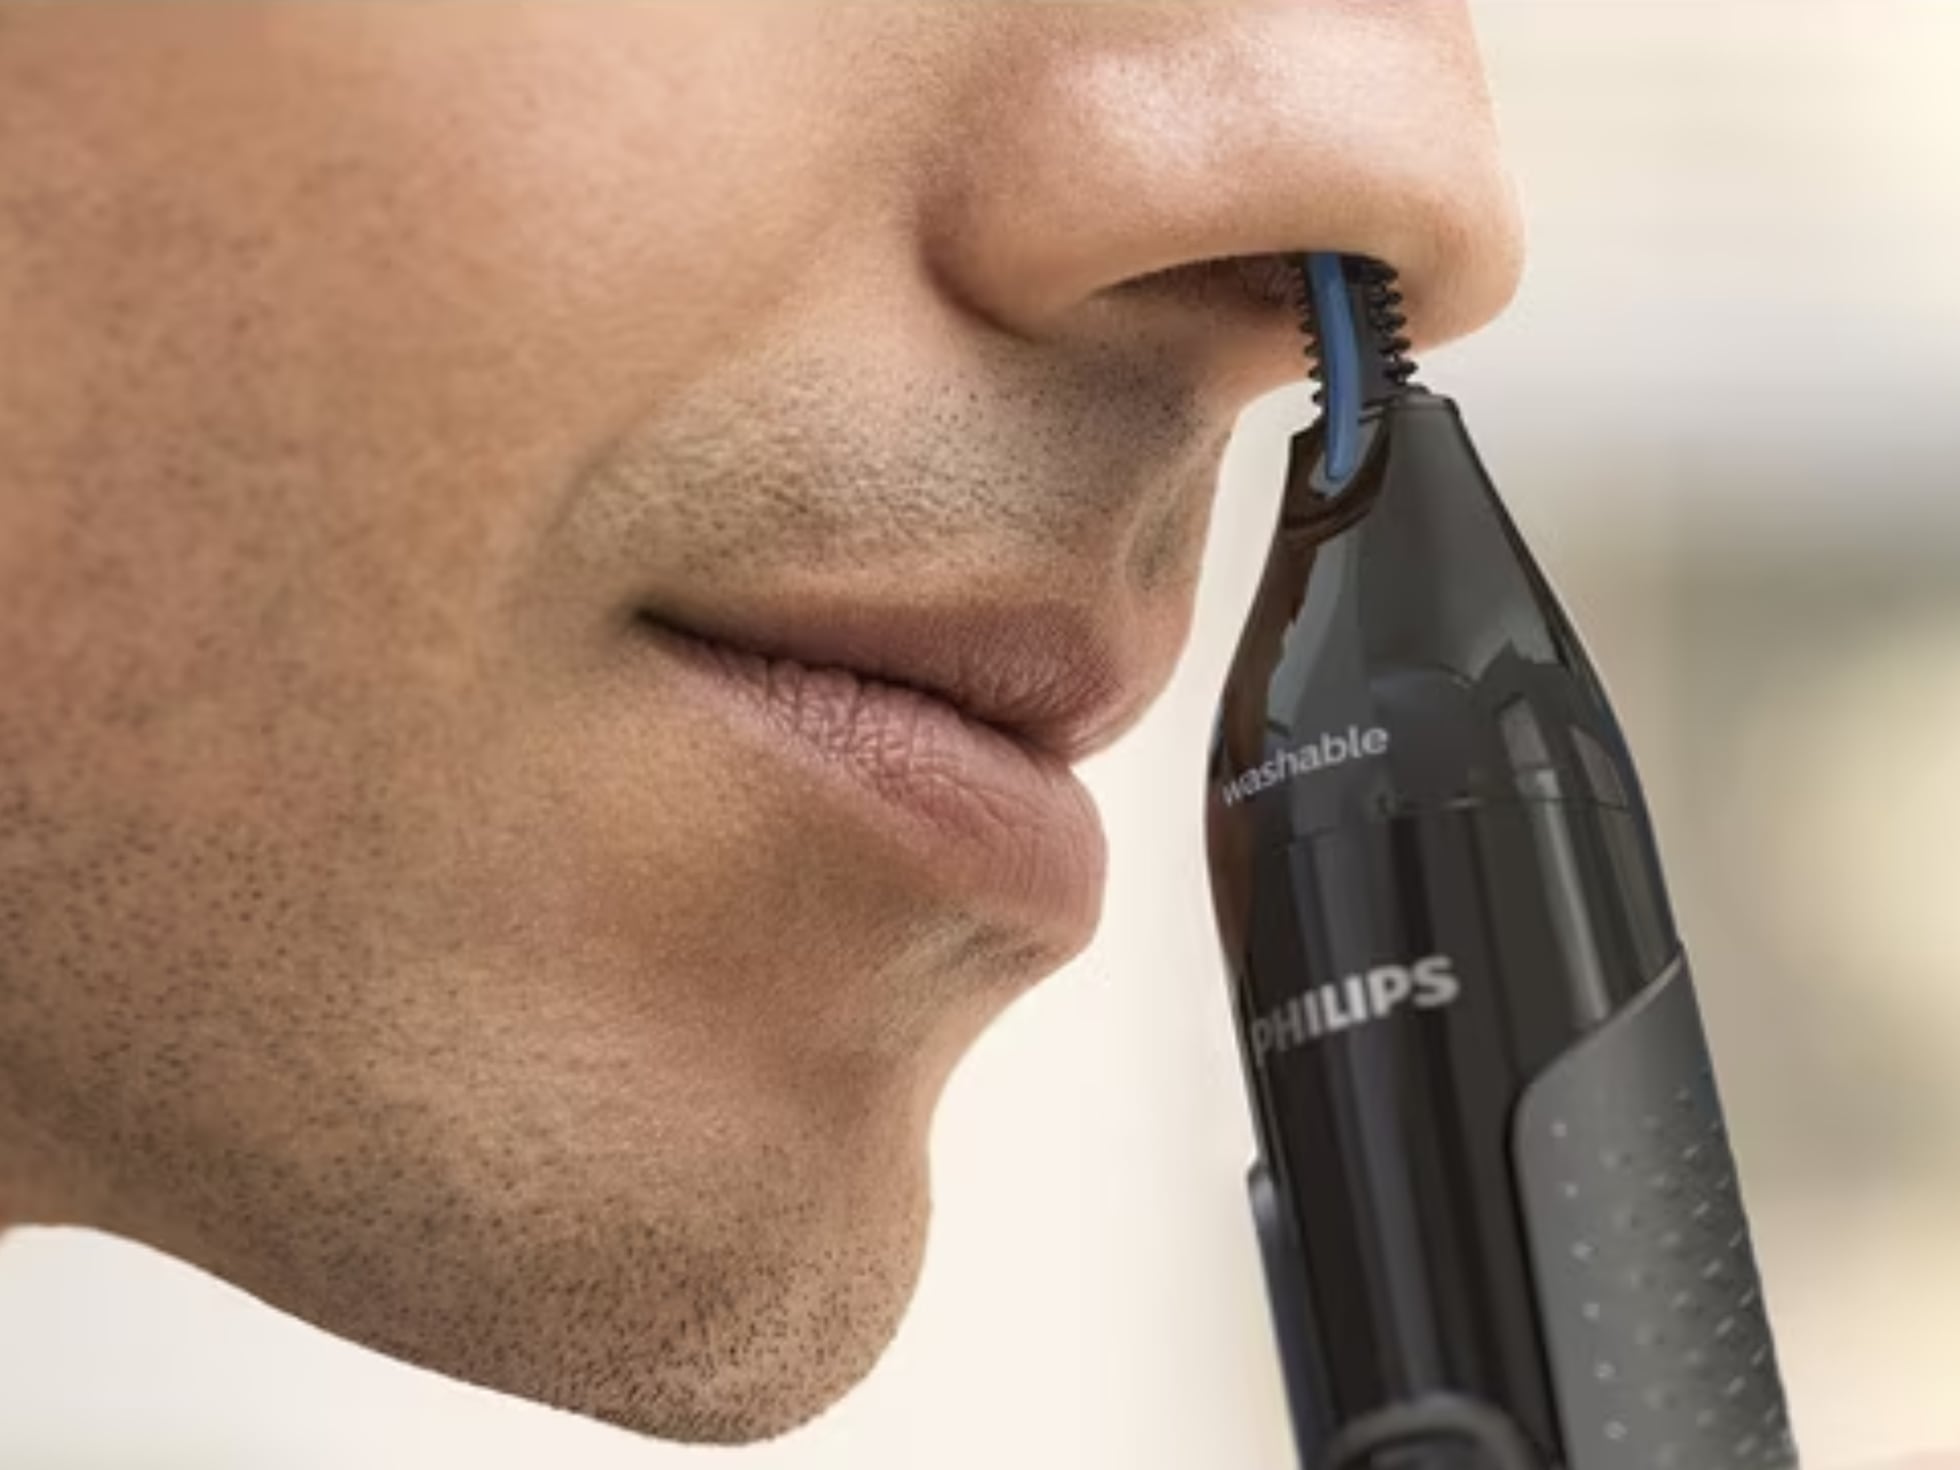  Philips Norelco - Recortador de pelo de nariz